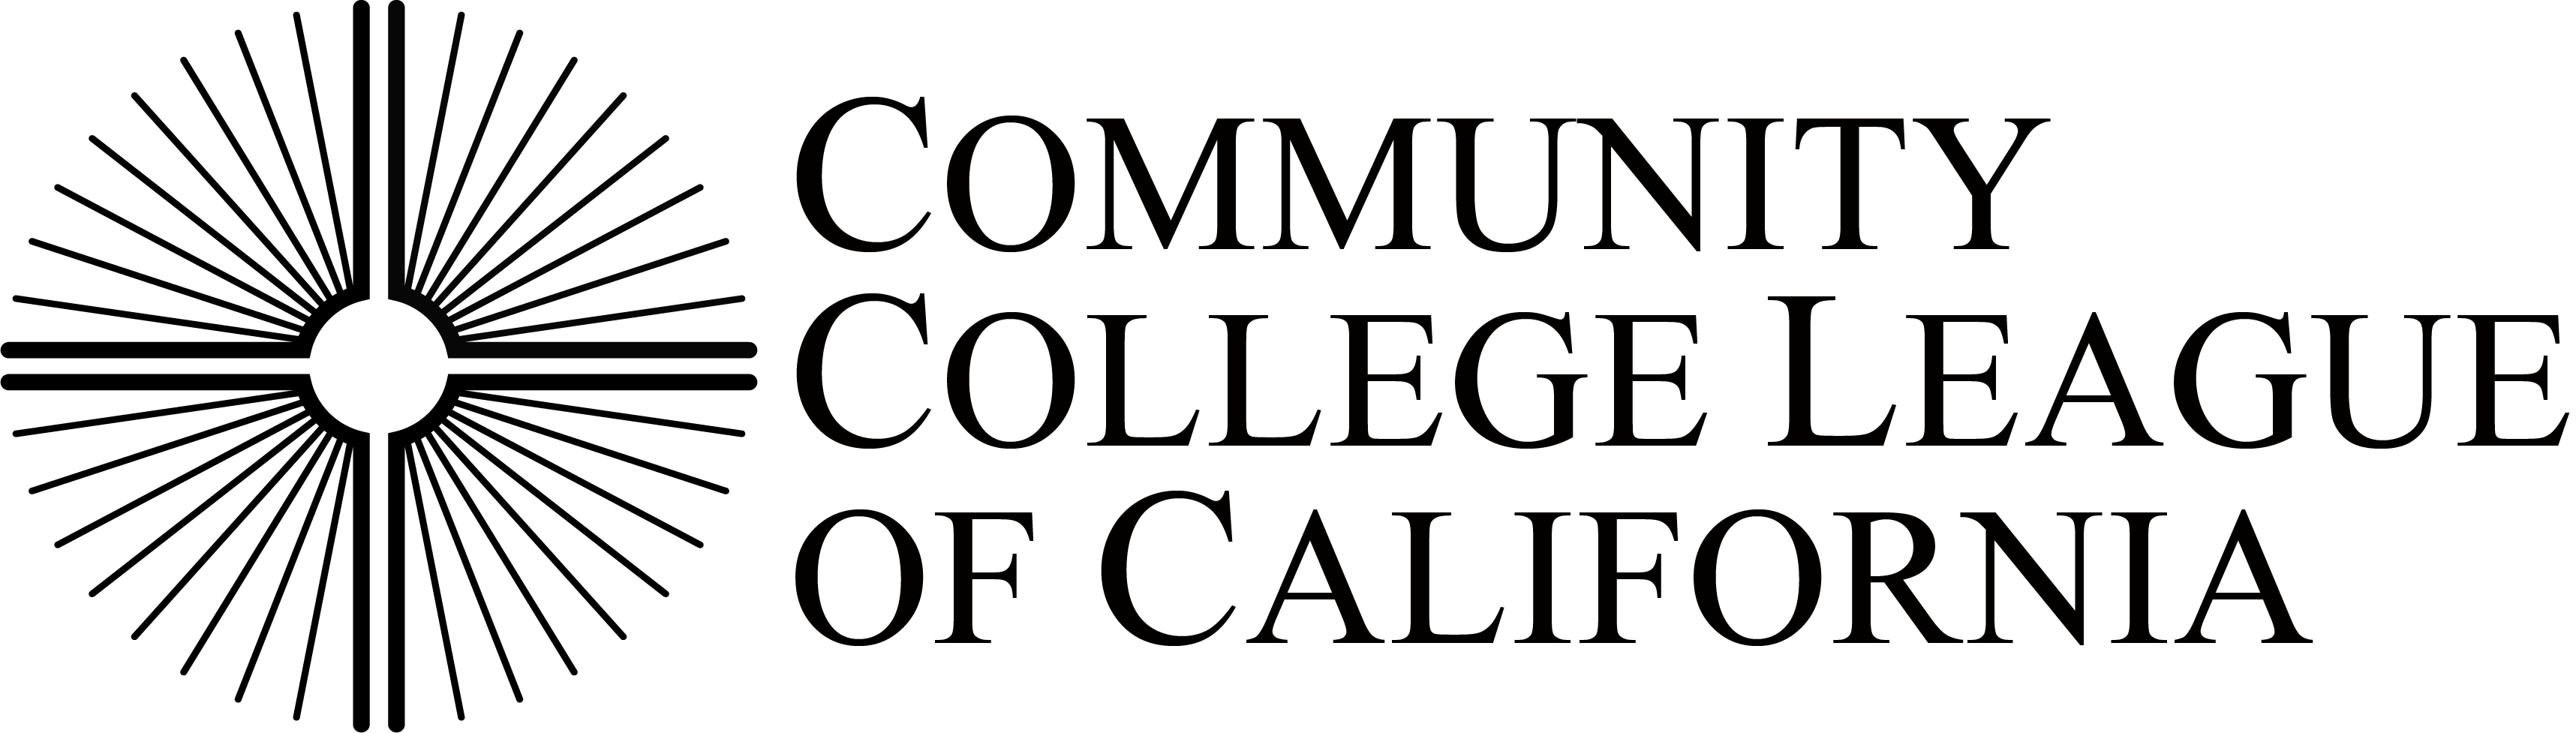 Community College League of California logo